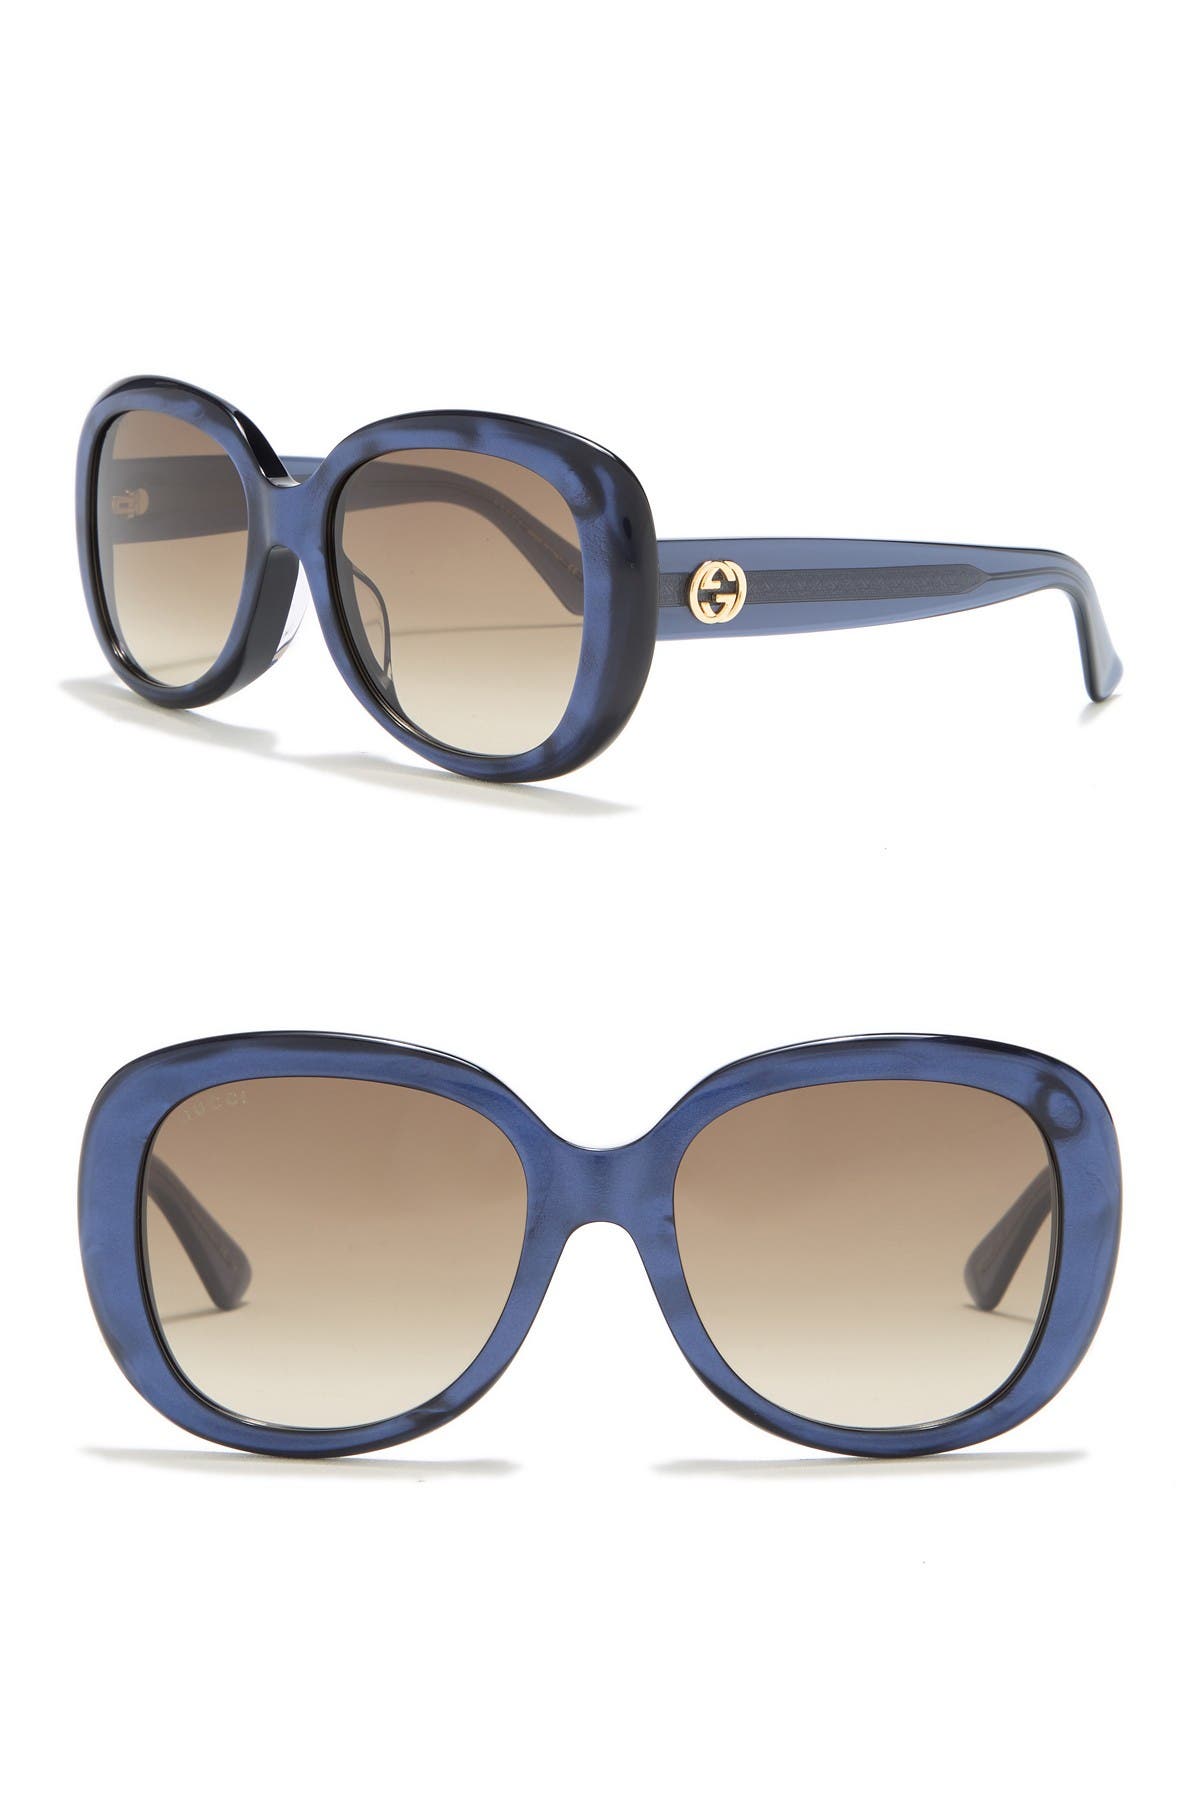 gucci 55mm oversized sunglasses